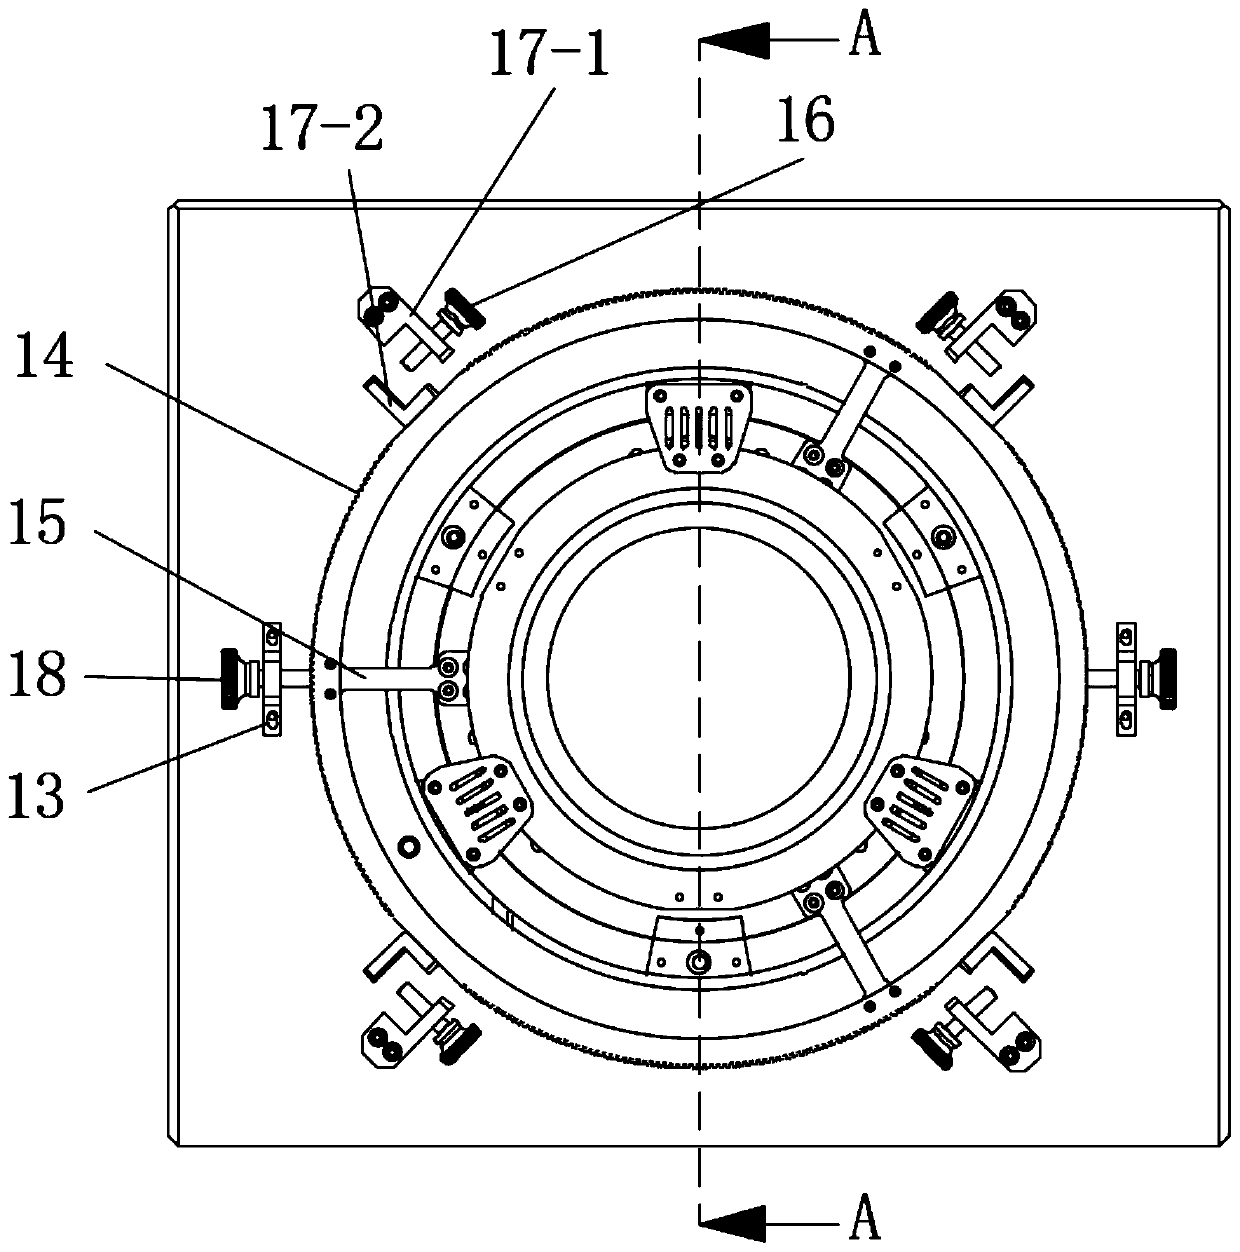 A high-precision de-eccentric focusing mechanism suitable for general optical systems